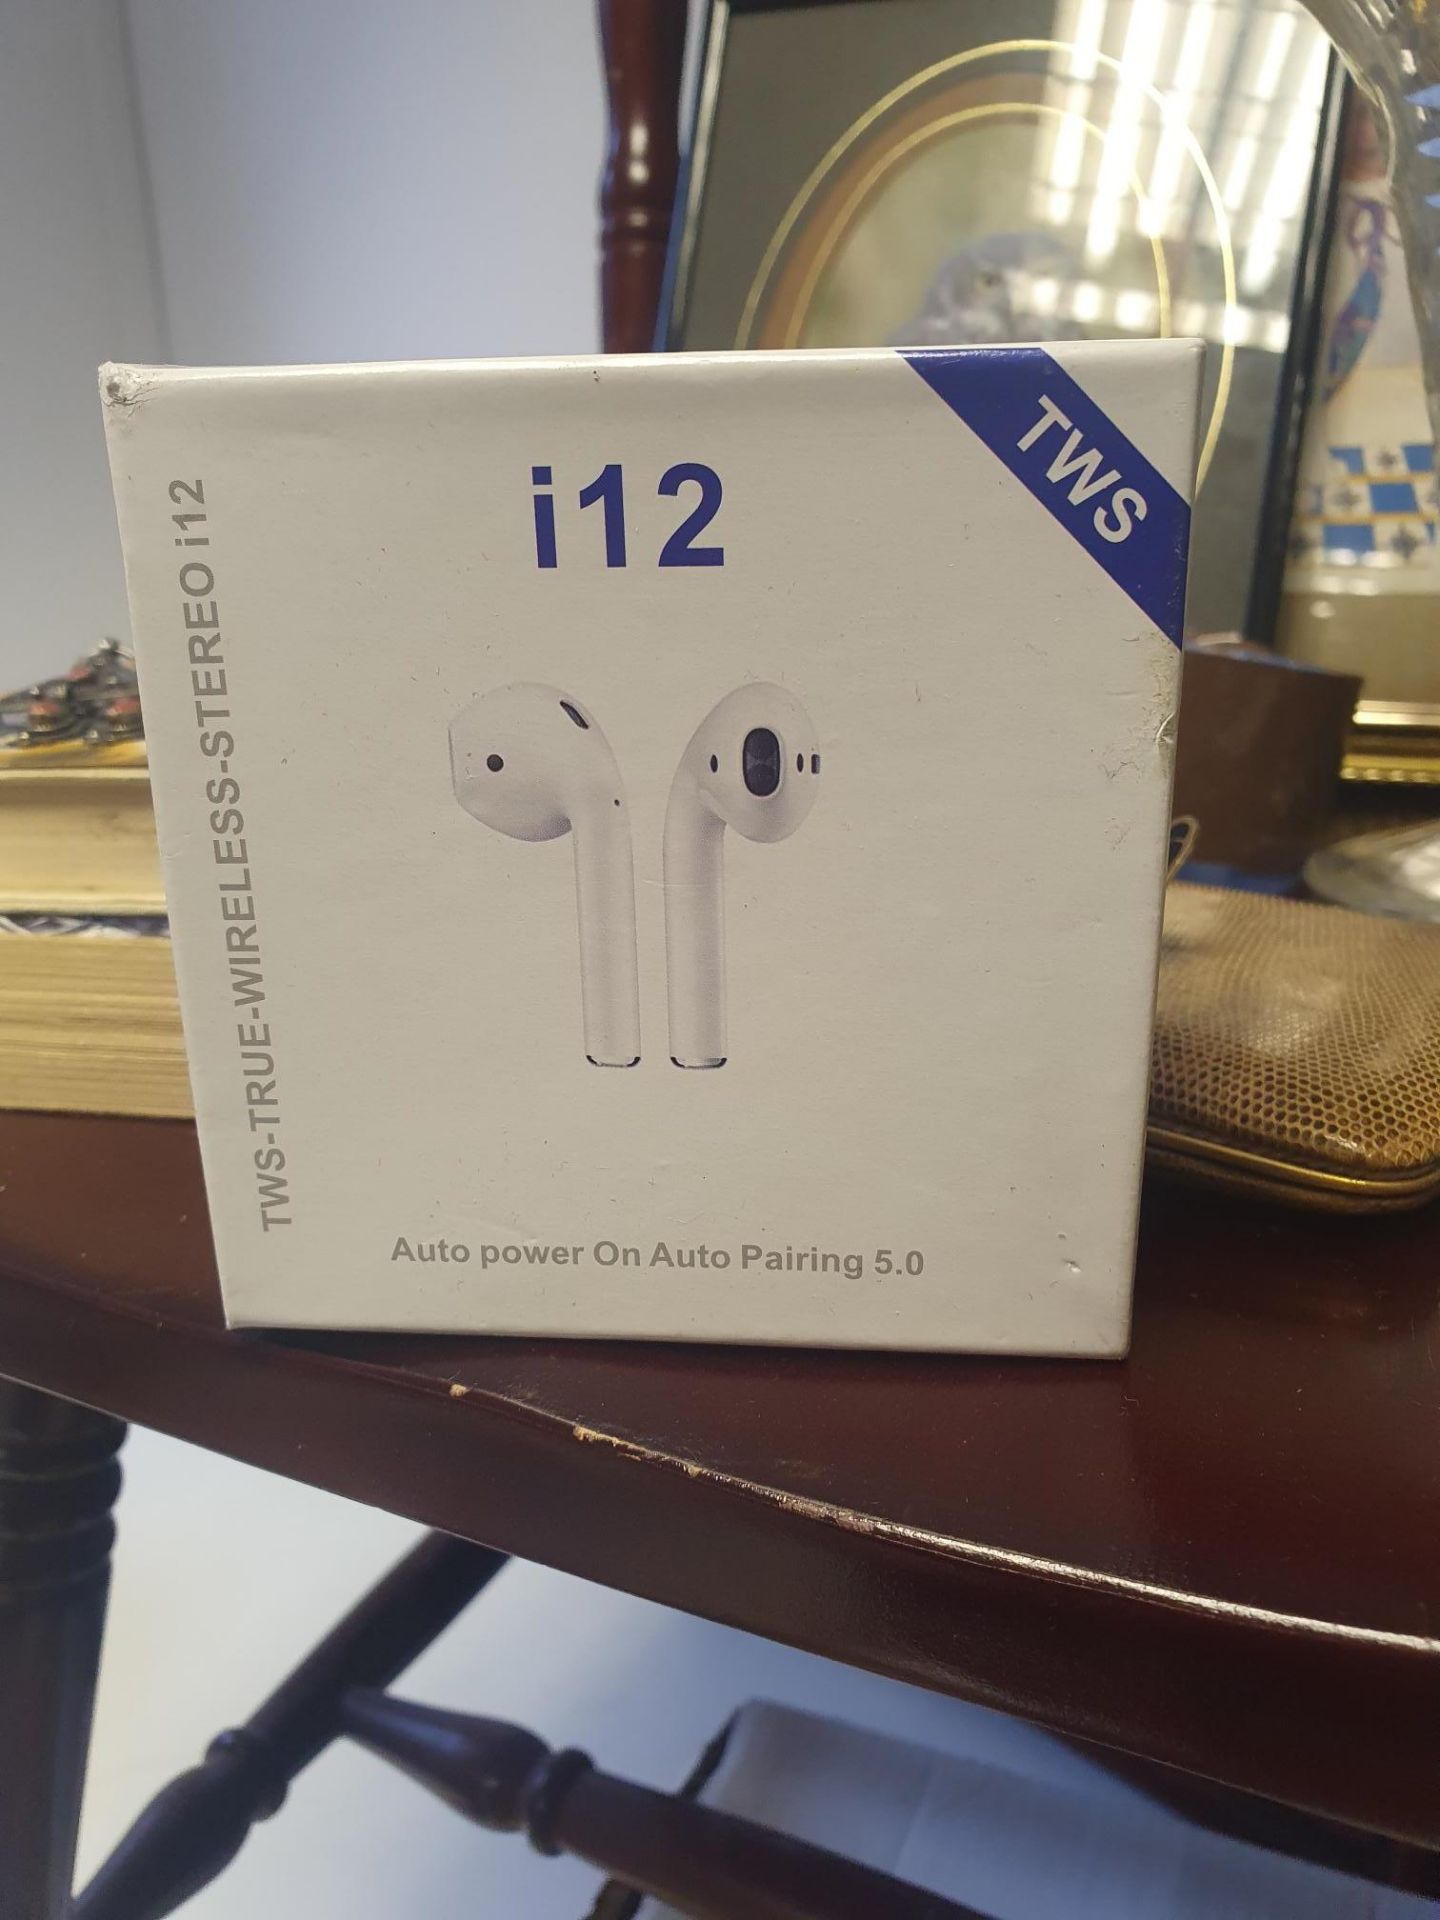 Wireless earphones-Boxed